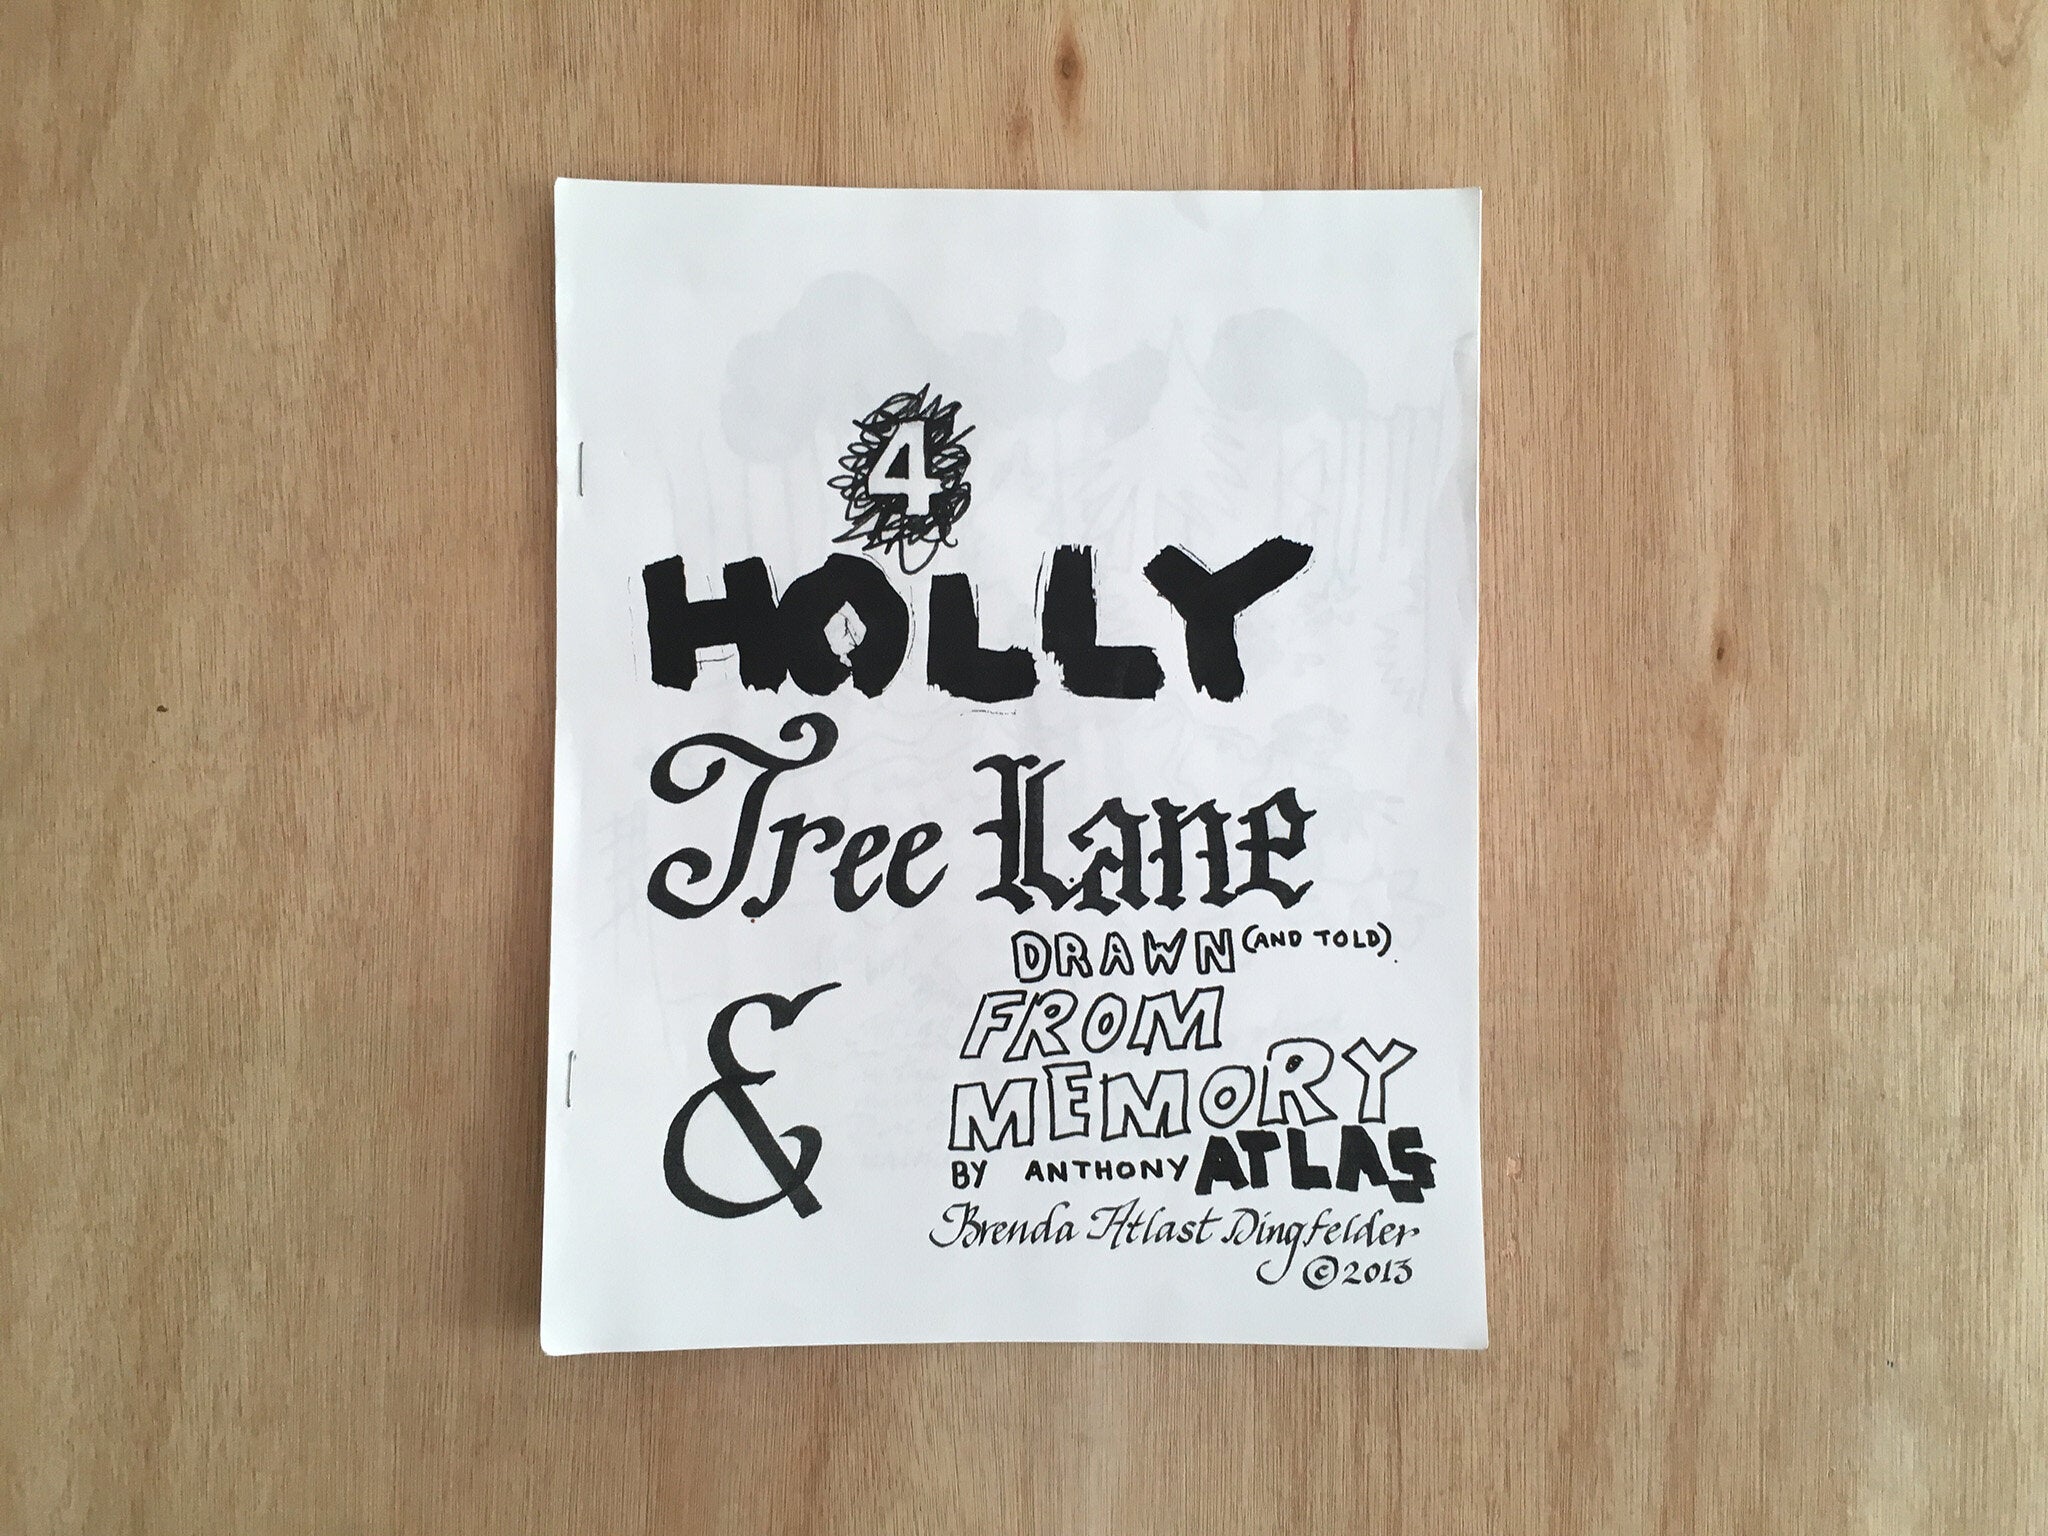 4 HOLLY TREE LANE By Anthony Atlas & Brenda Atlast Dingfelder